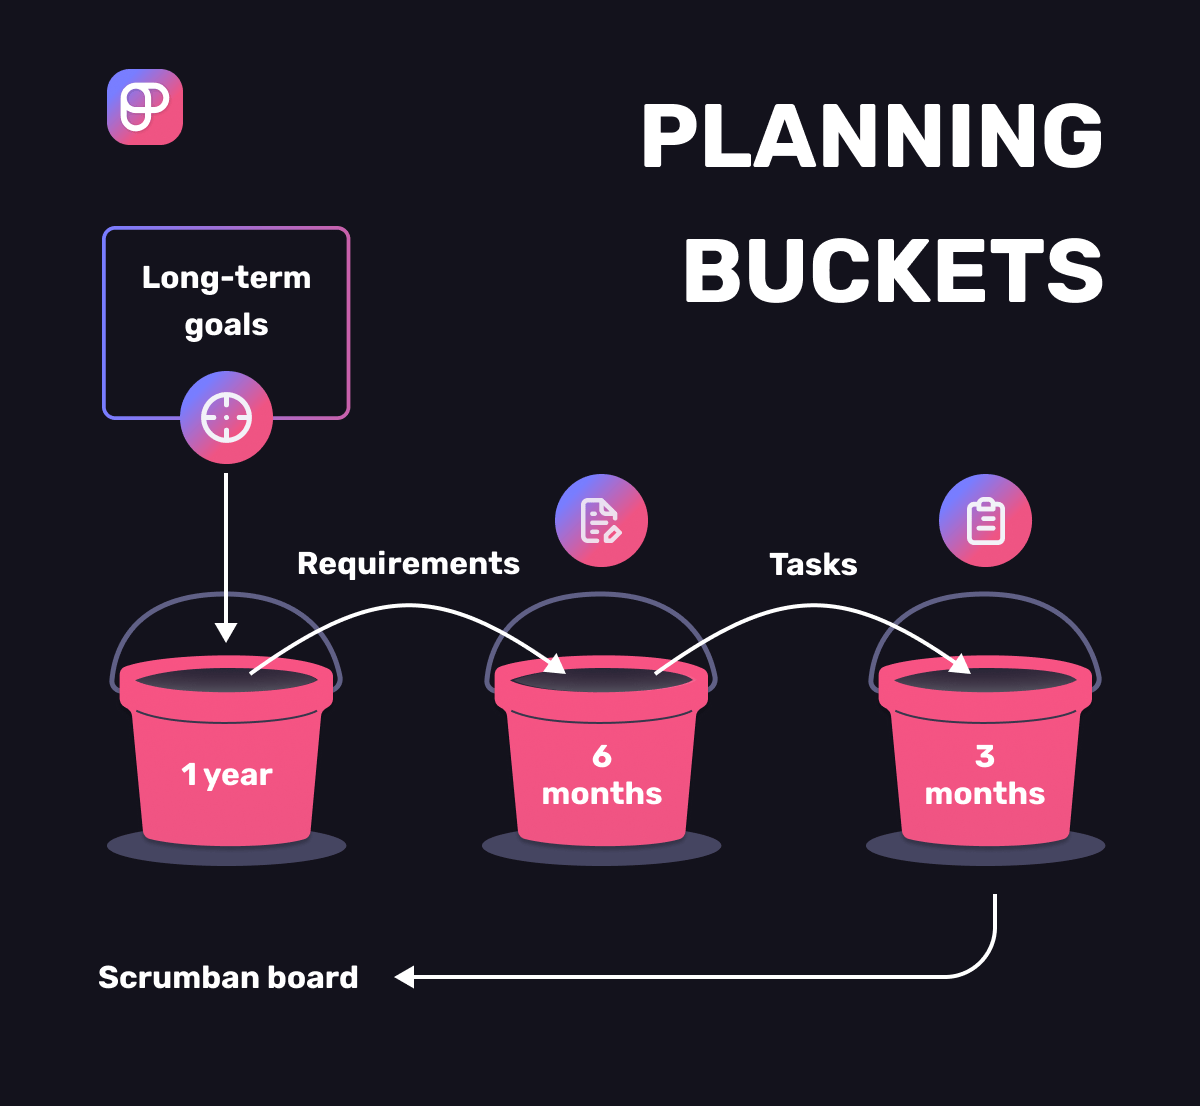 Bucket-size planning in Scrumban